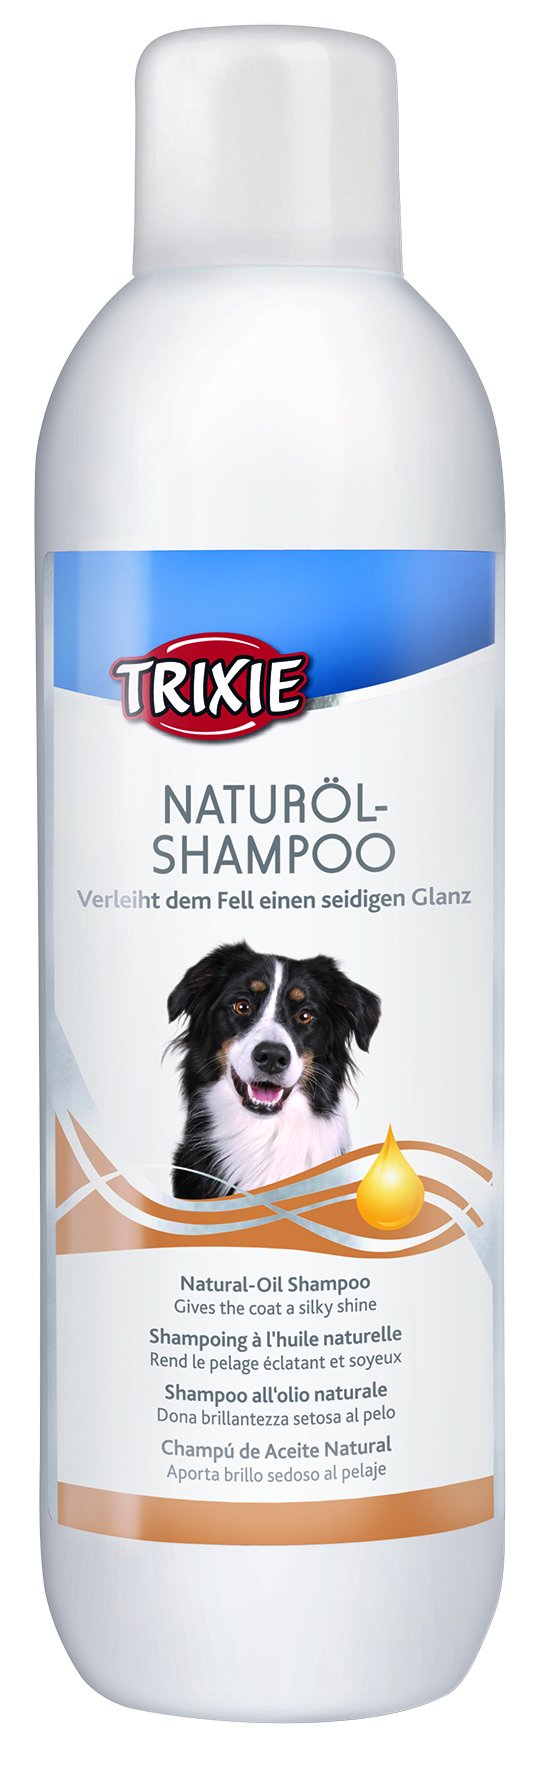 2910 Natural-oil shampoo, 1 l